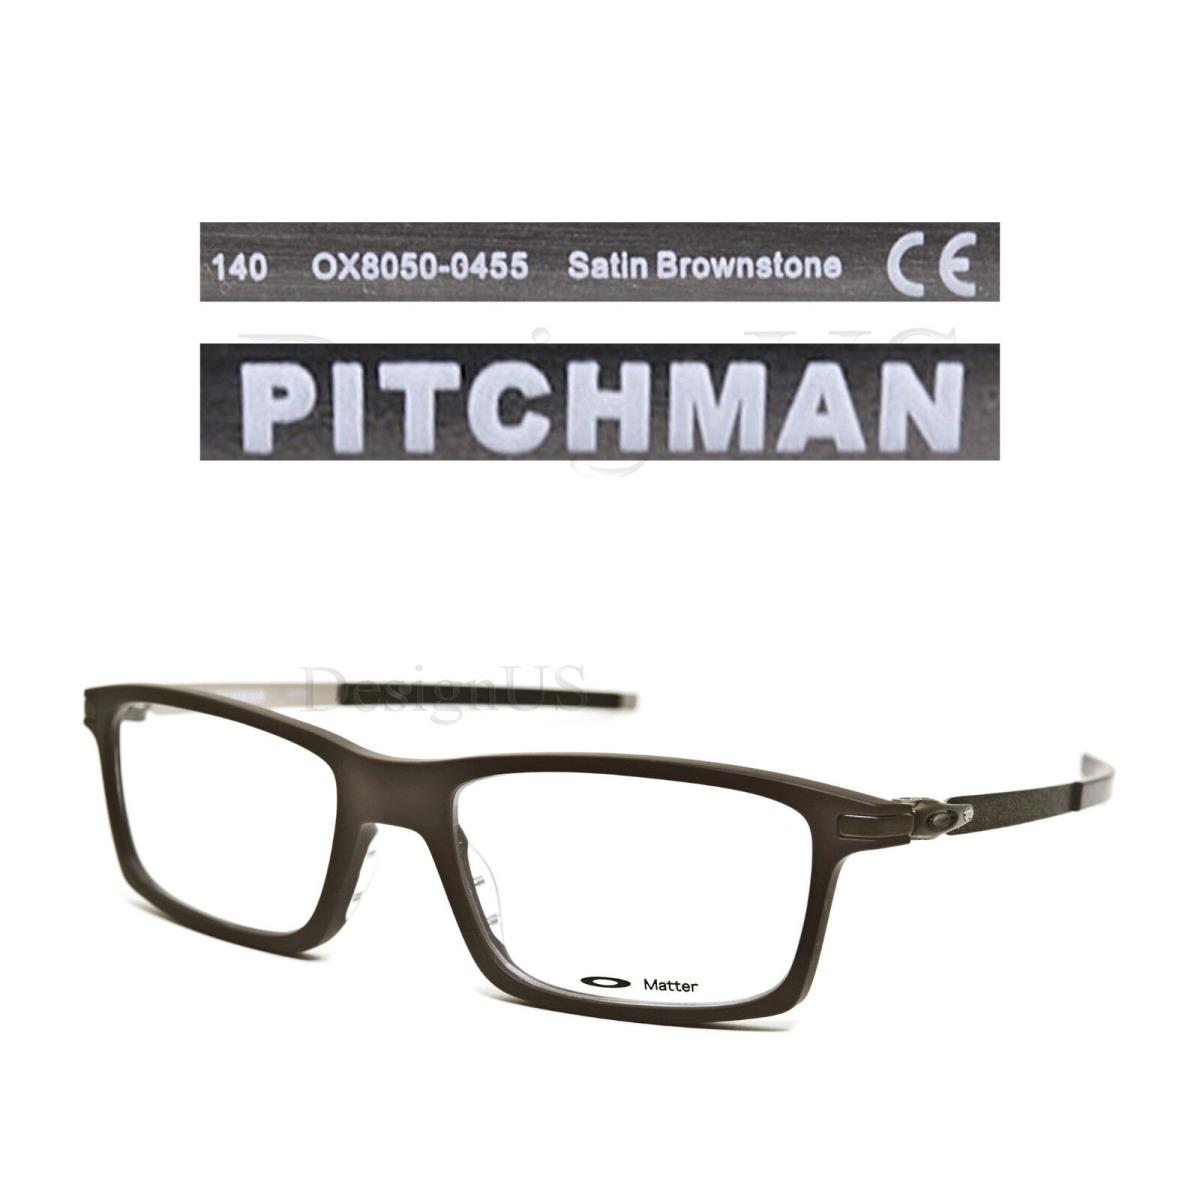 Oakley Pitchman OX8050-0455 Satin Brownstone 55/18/140 Eyeglasses - Frame: Satin Brownstone, Lens: